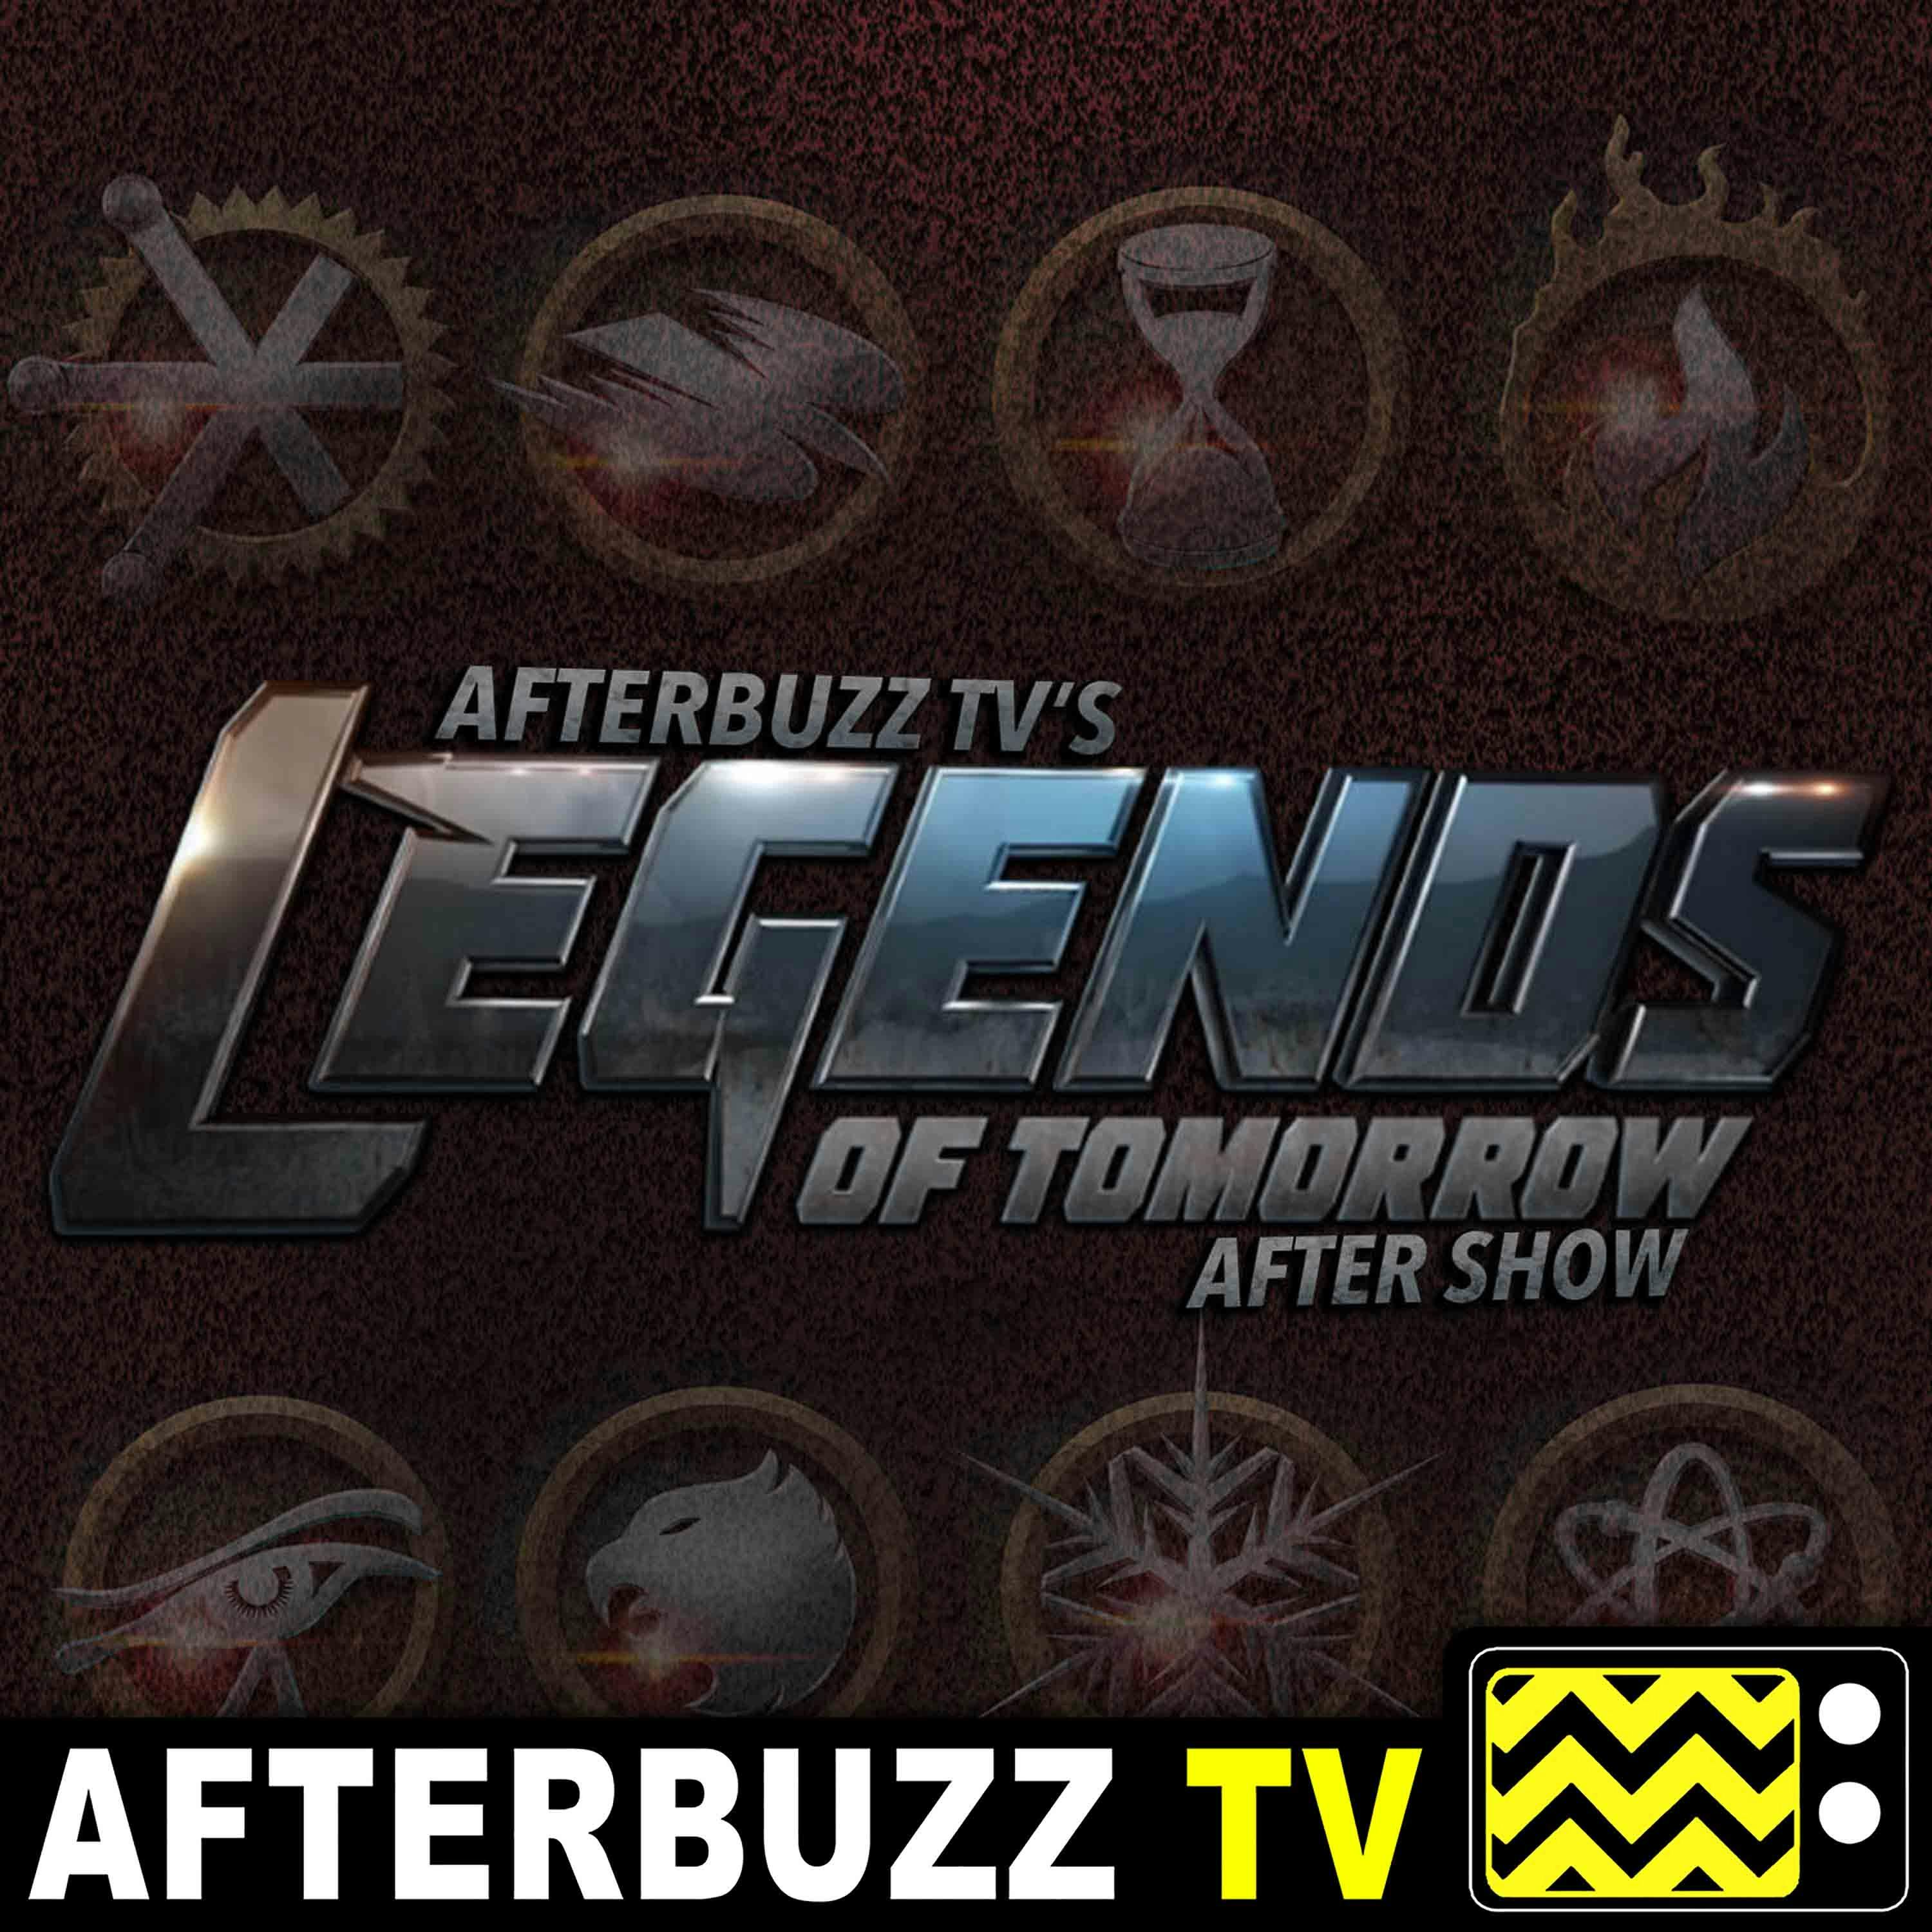 Legends Of Tomorrow S:3 | I, Ava E:16 | AfterBuzz TV AfterShow